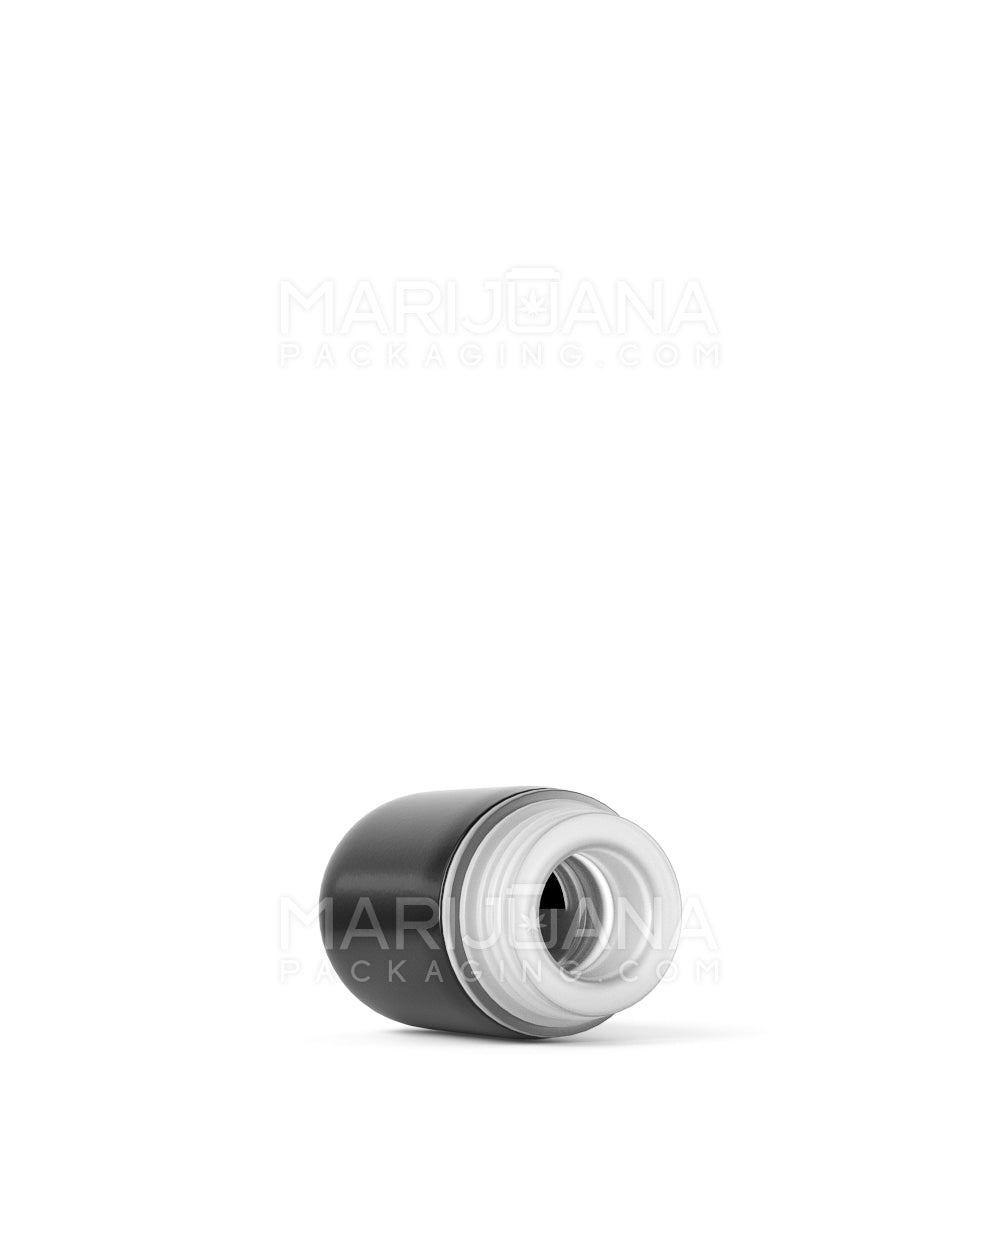 AVD | Round Vape Mouthpiece for Glass Cartridges | Black Ceramic - Eazy Press - 600 Count - 6